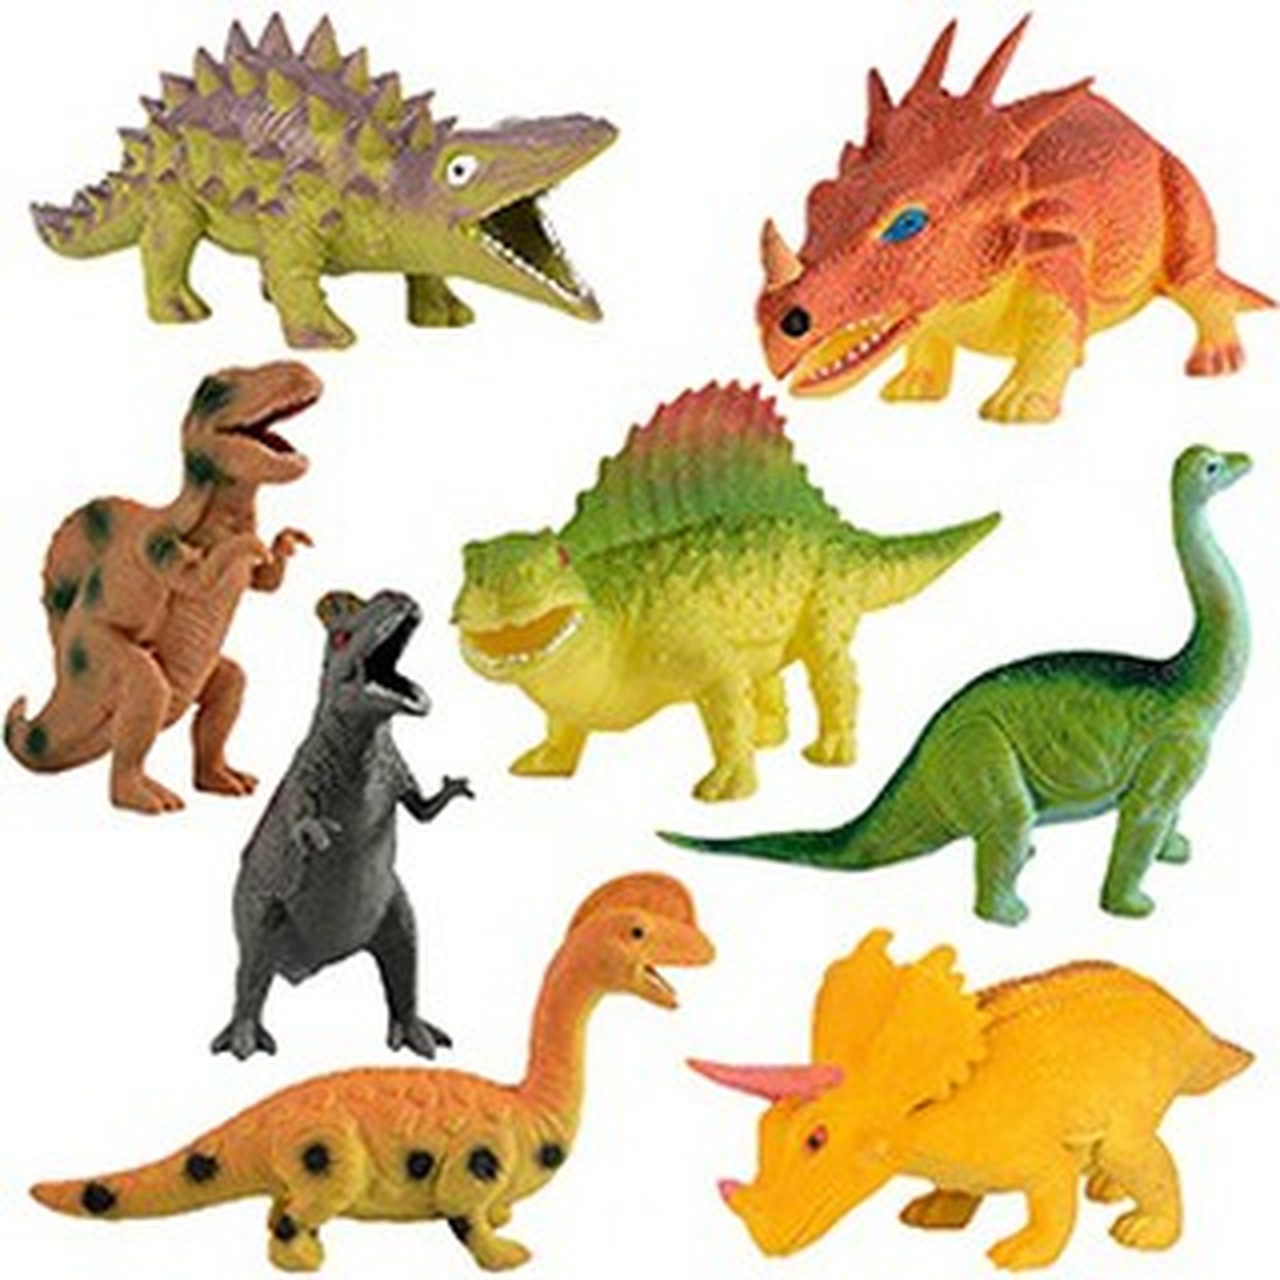 Dinossauros Colecao Elasticos Estica e Puxa - Zoop Toys ZP00190